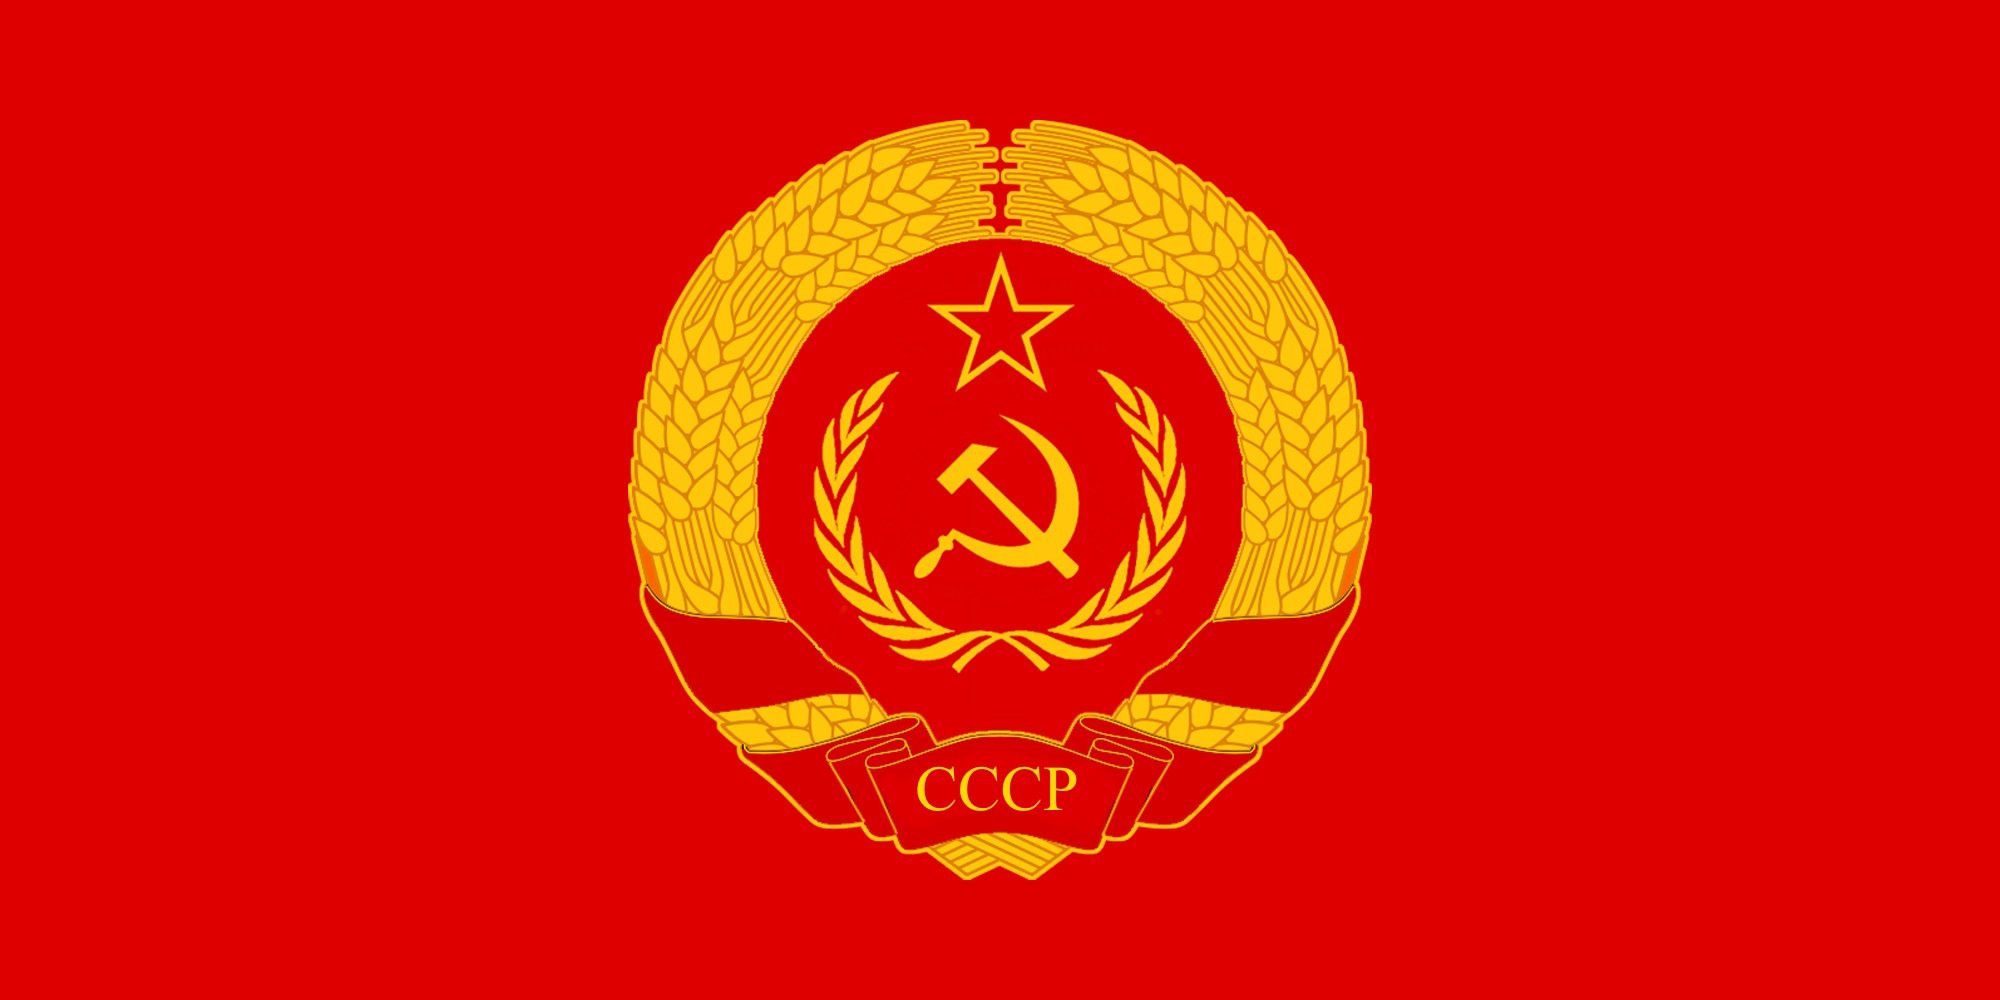 Union Of Soviet Socialist Republics Age Of History Games